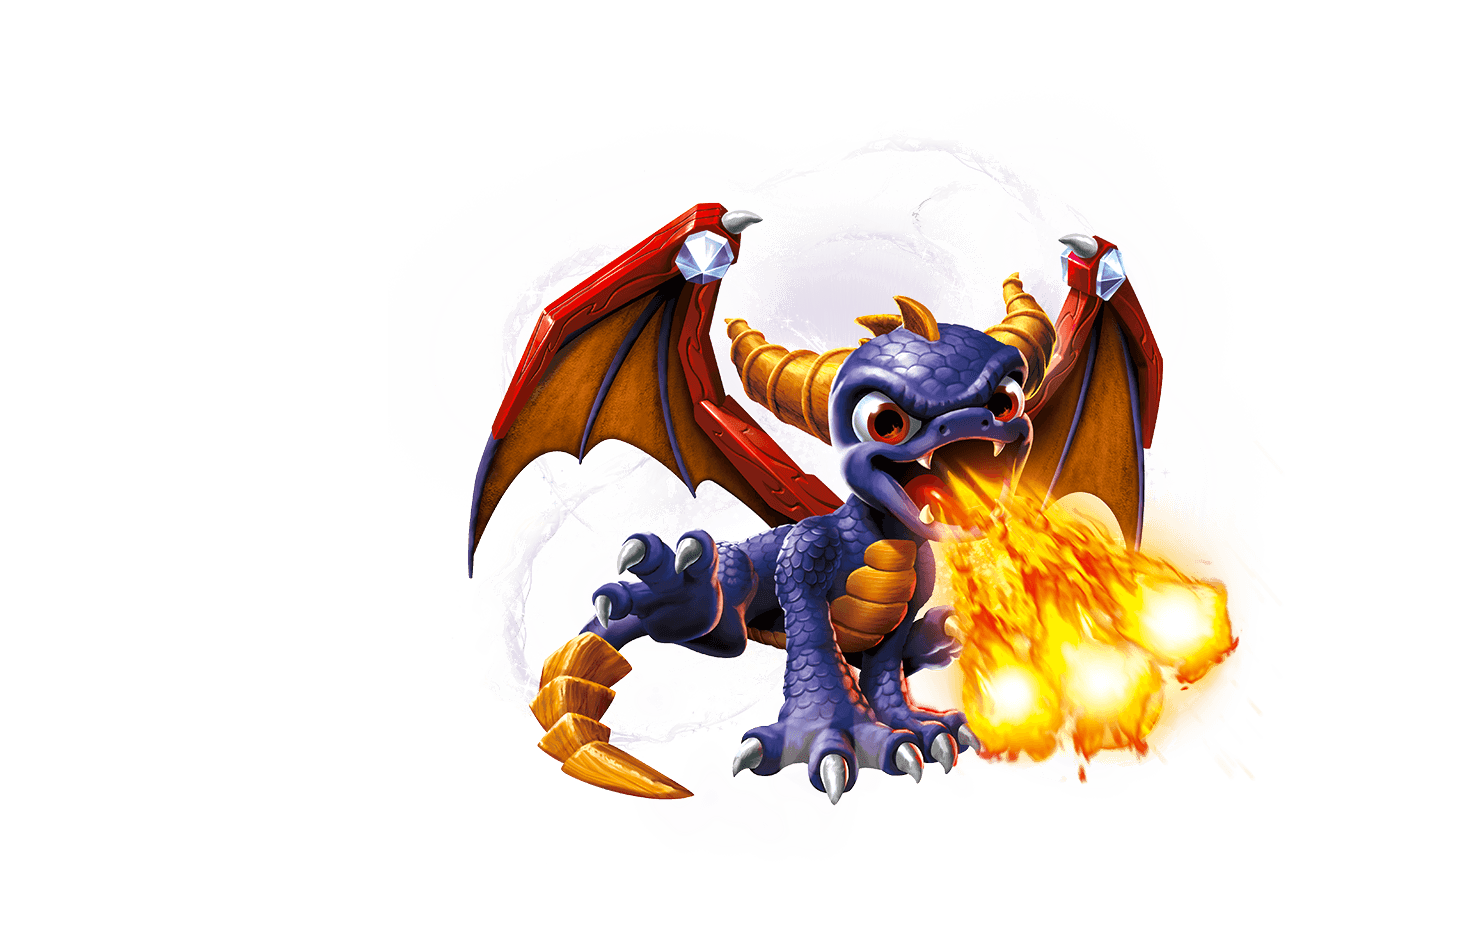 download Spyro the Dragon